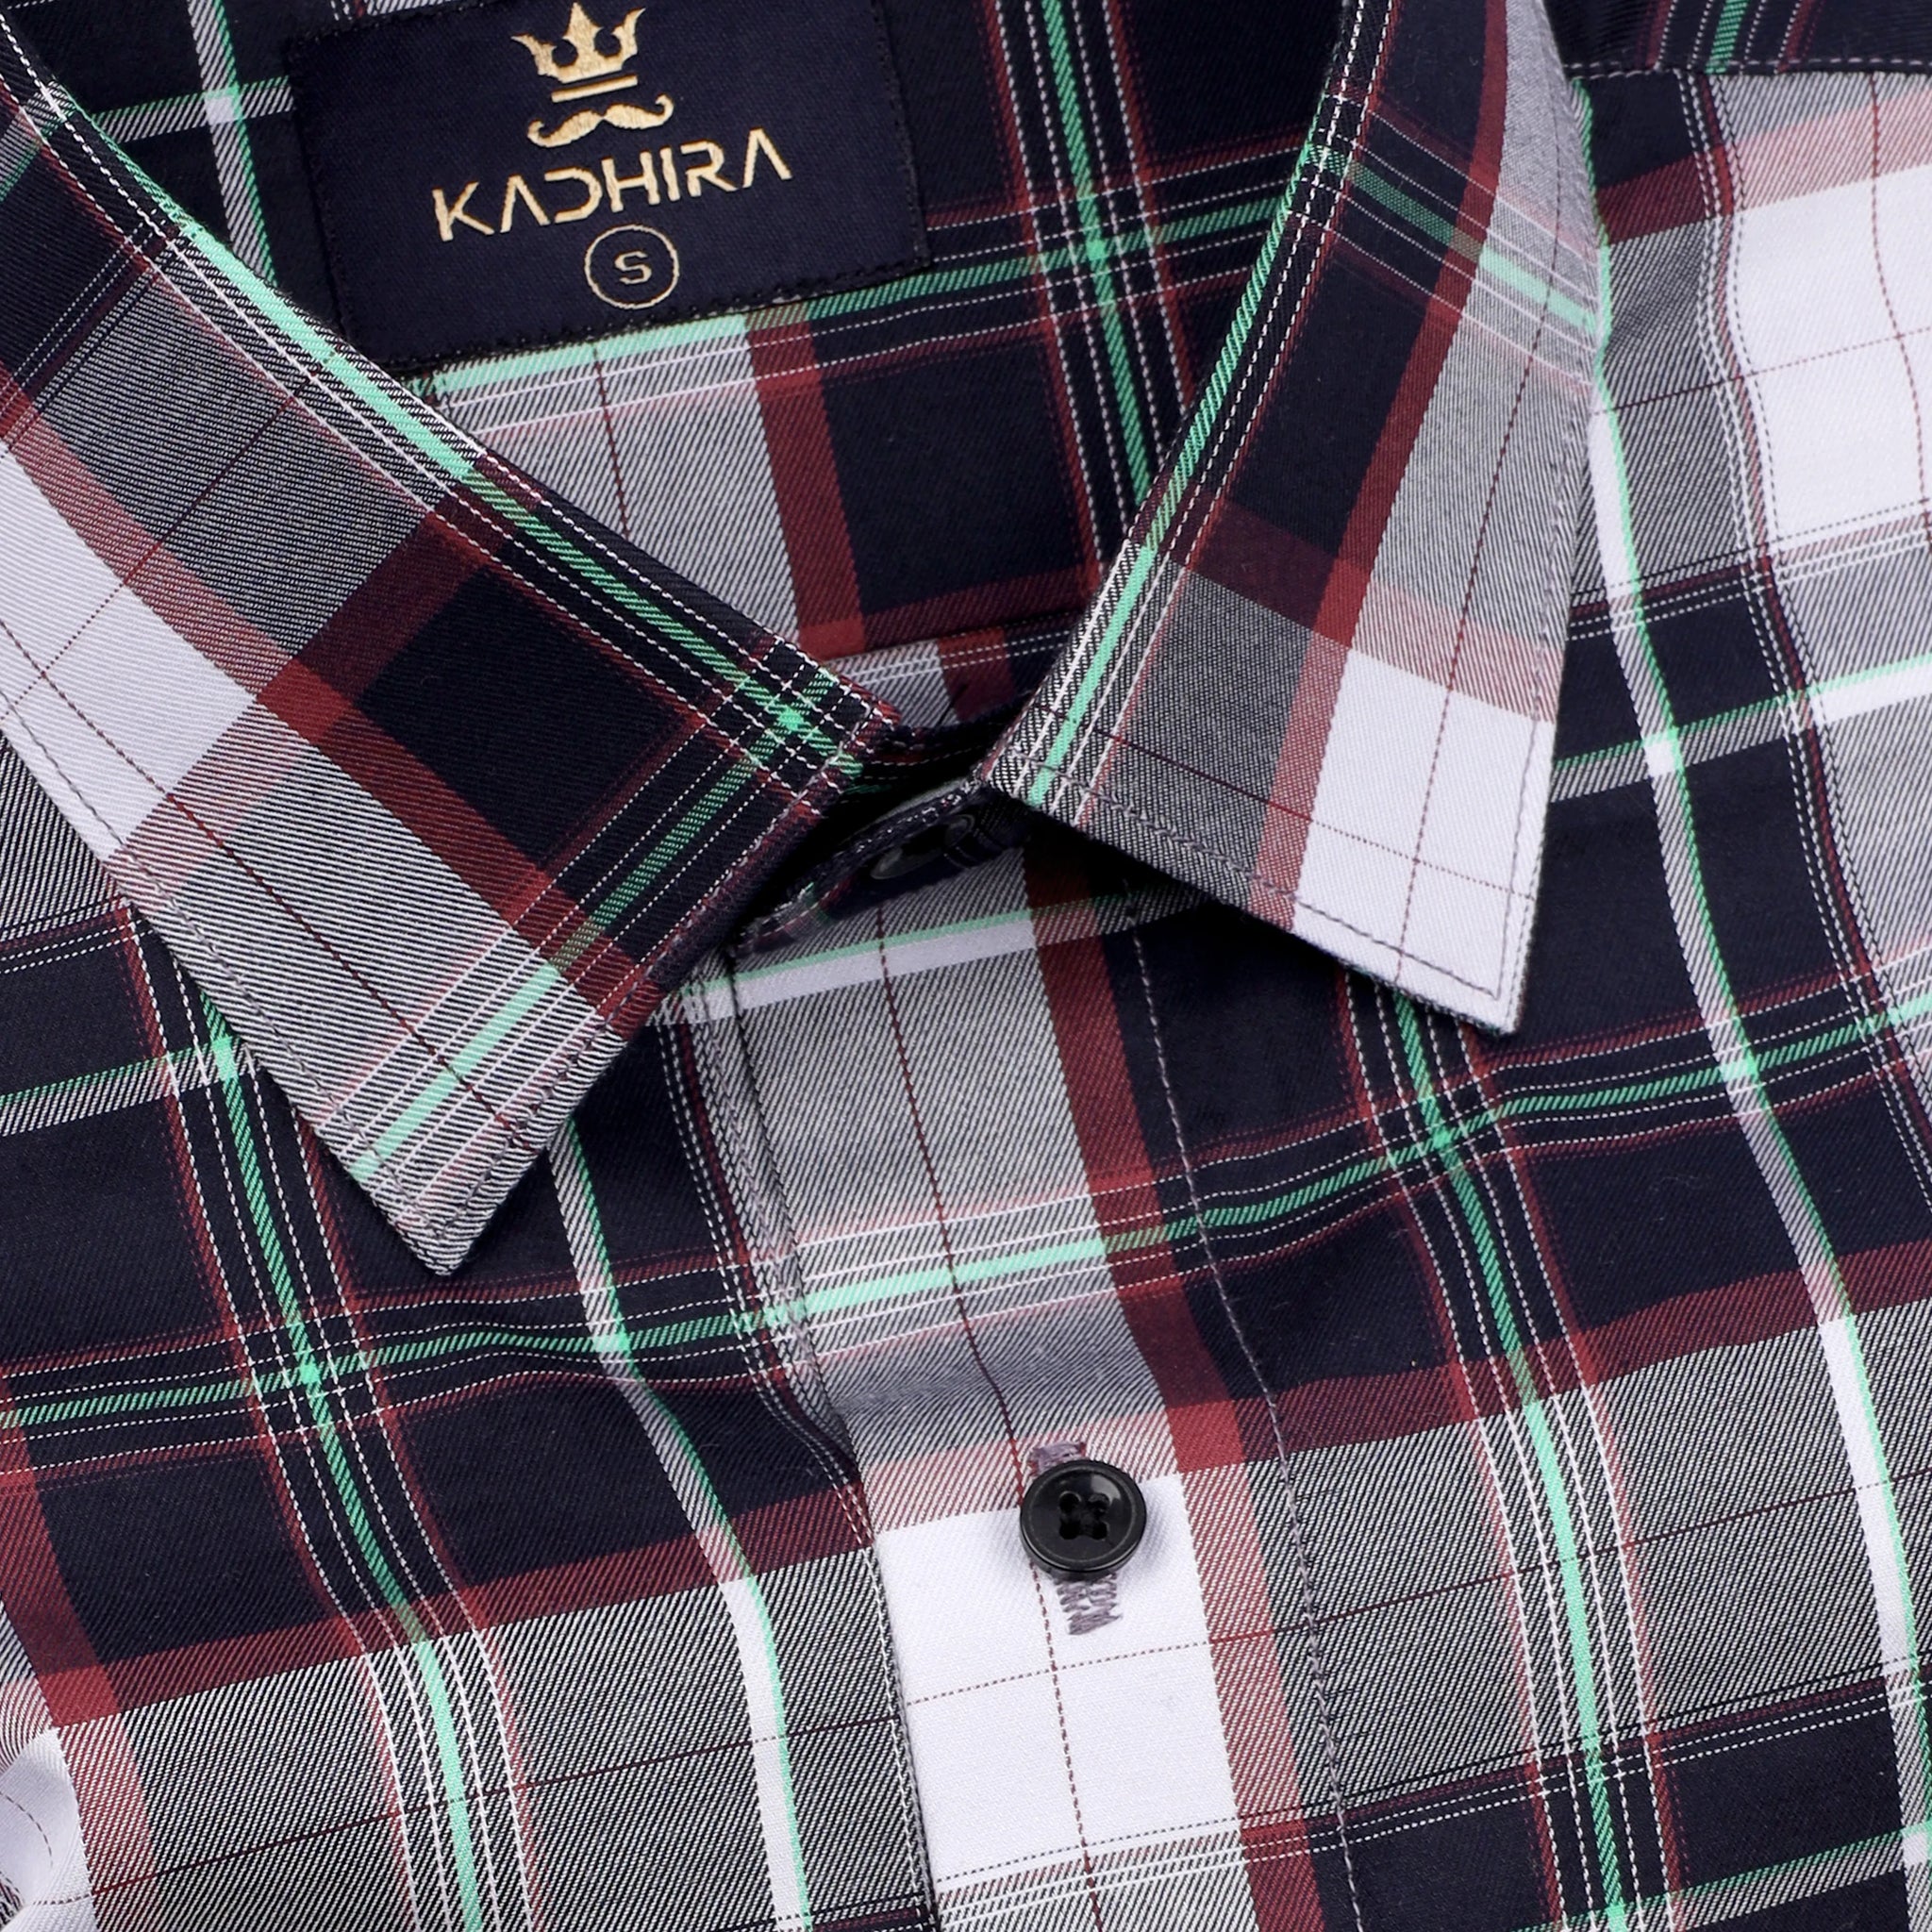 Warm Black Colored Madras Checks Premium Giza Cotton Shirt